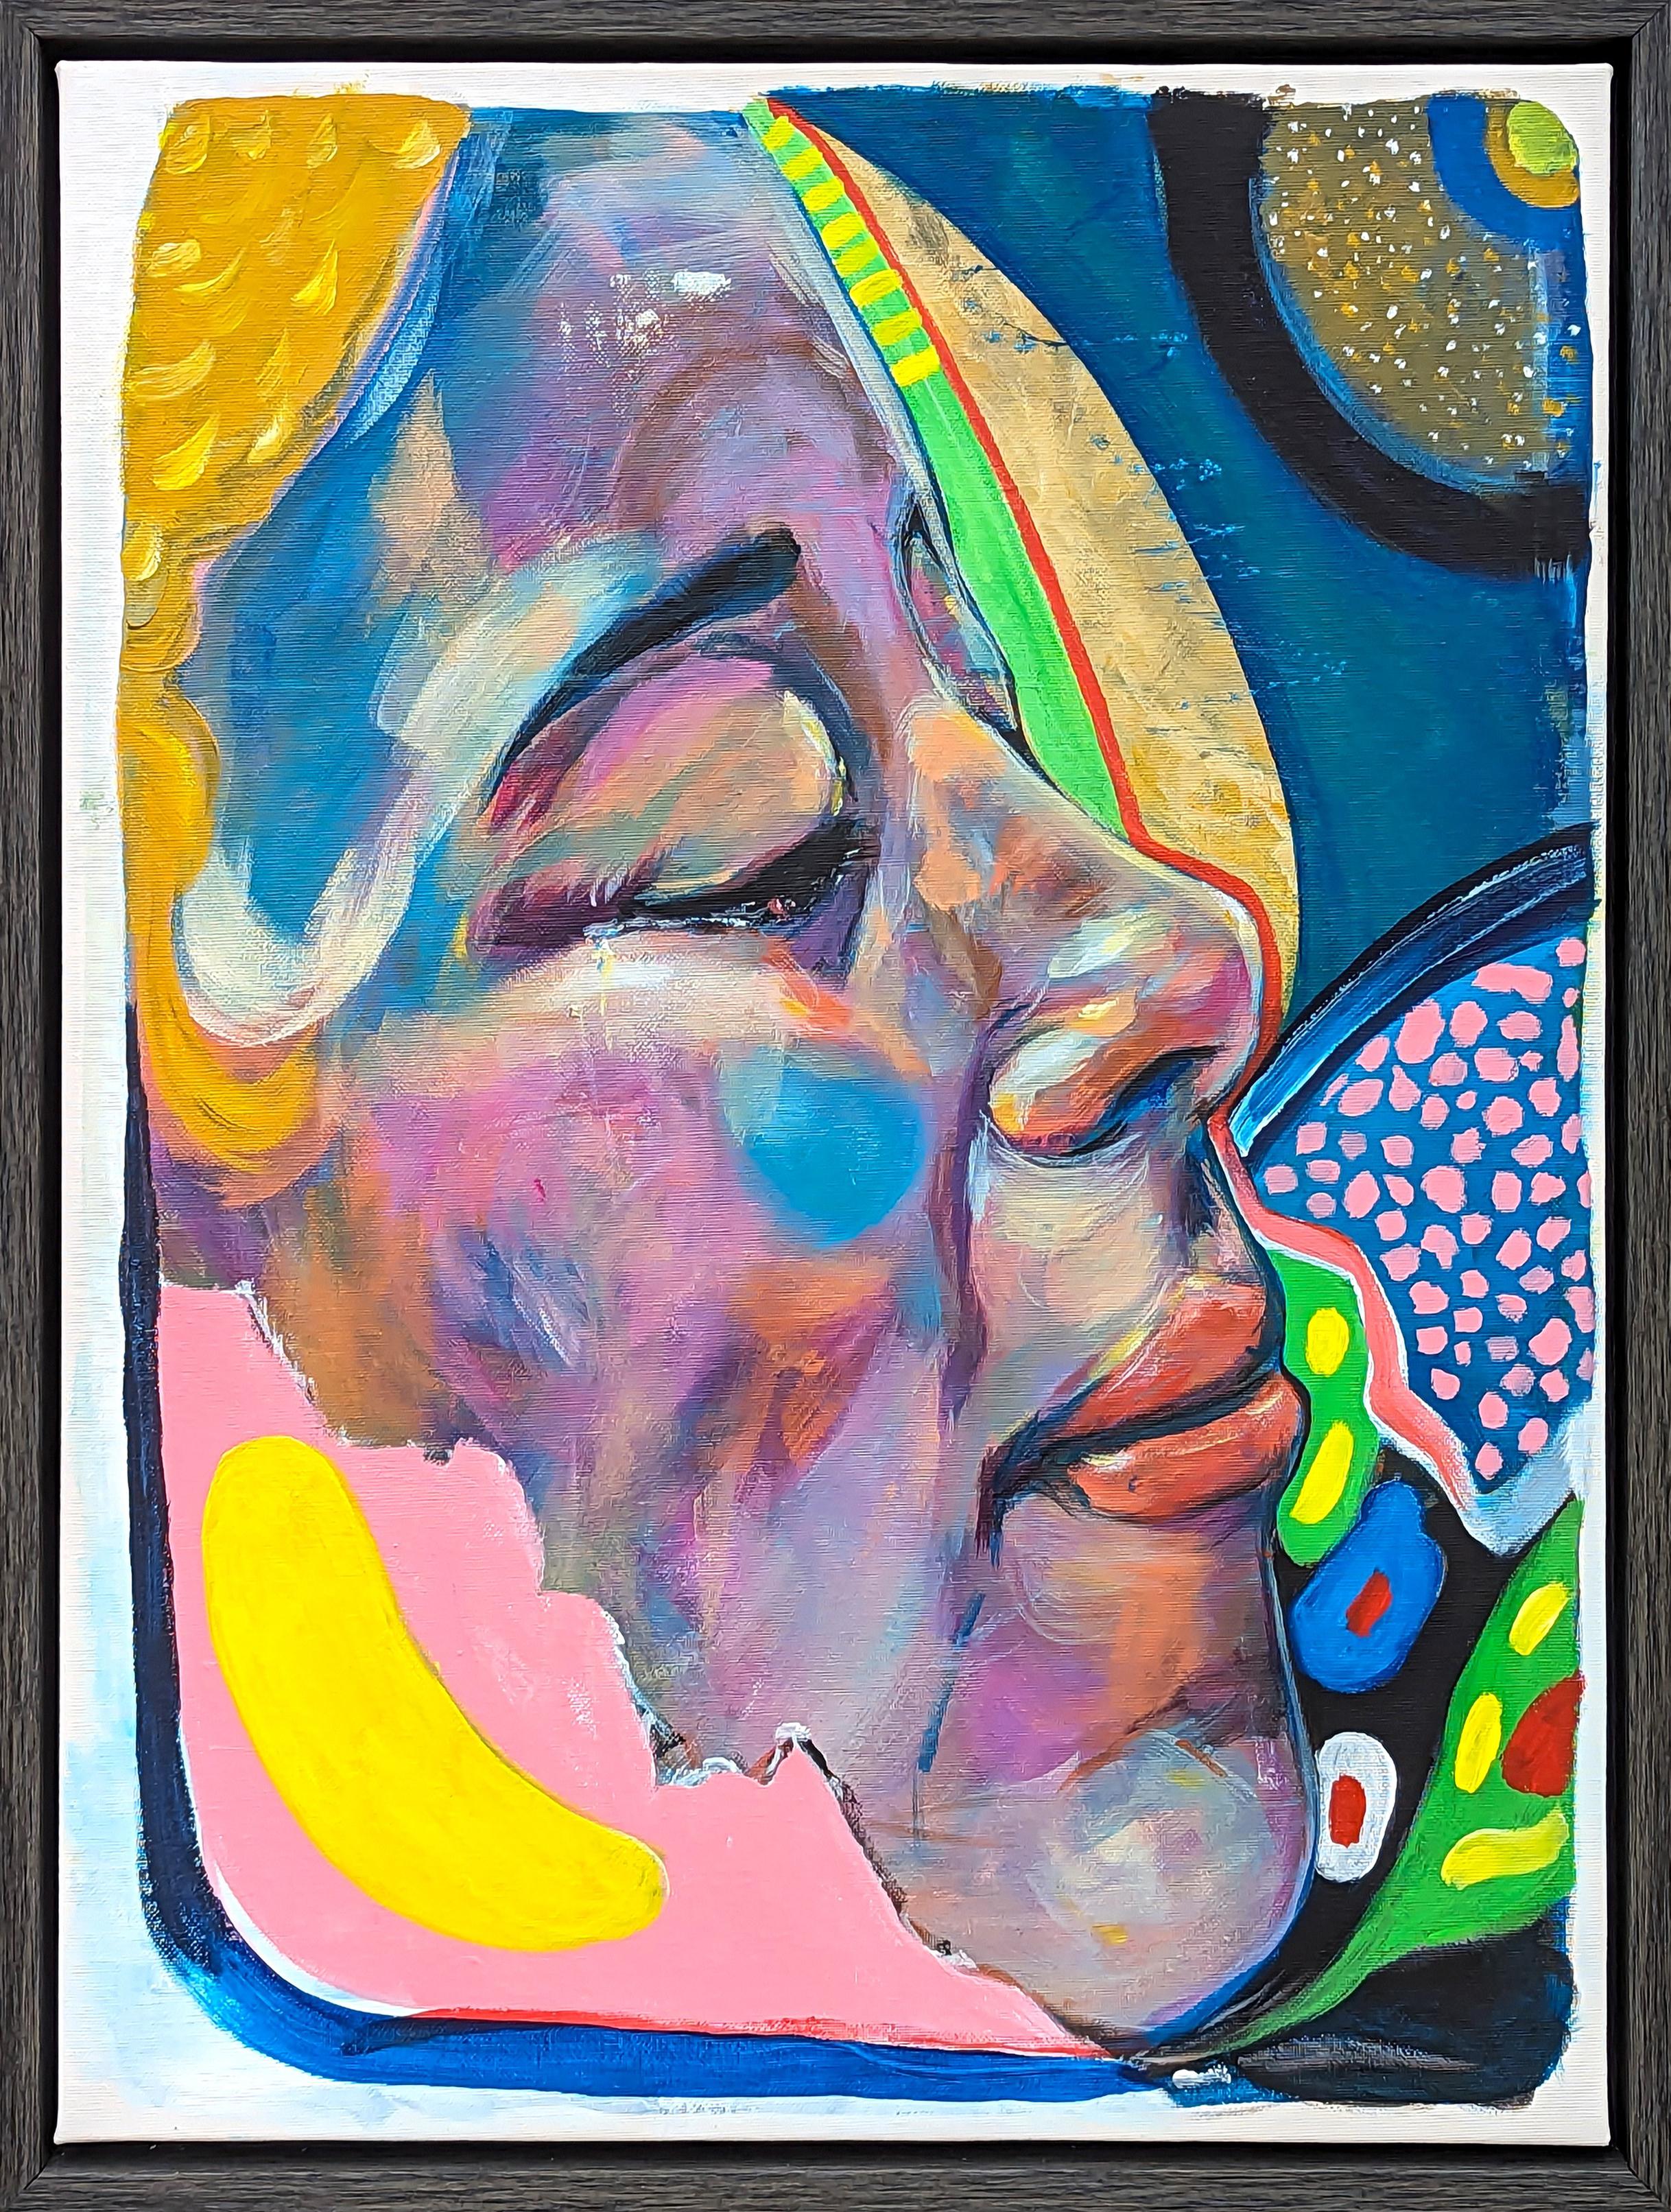 Figurative Painting Moisés Villafuerte - "The Contemporary Abstract Colorful Figurative Portrait Painting (peinture contemporaine abstraite et colorée)